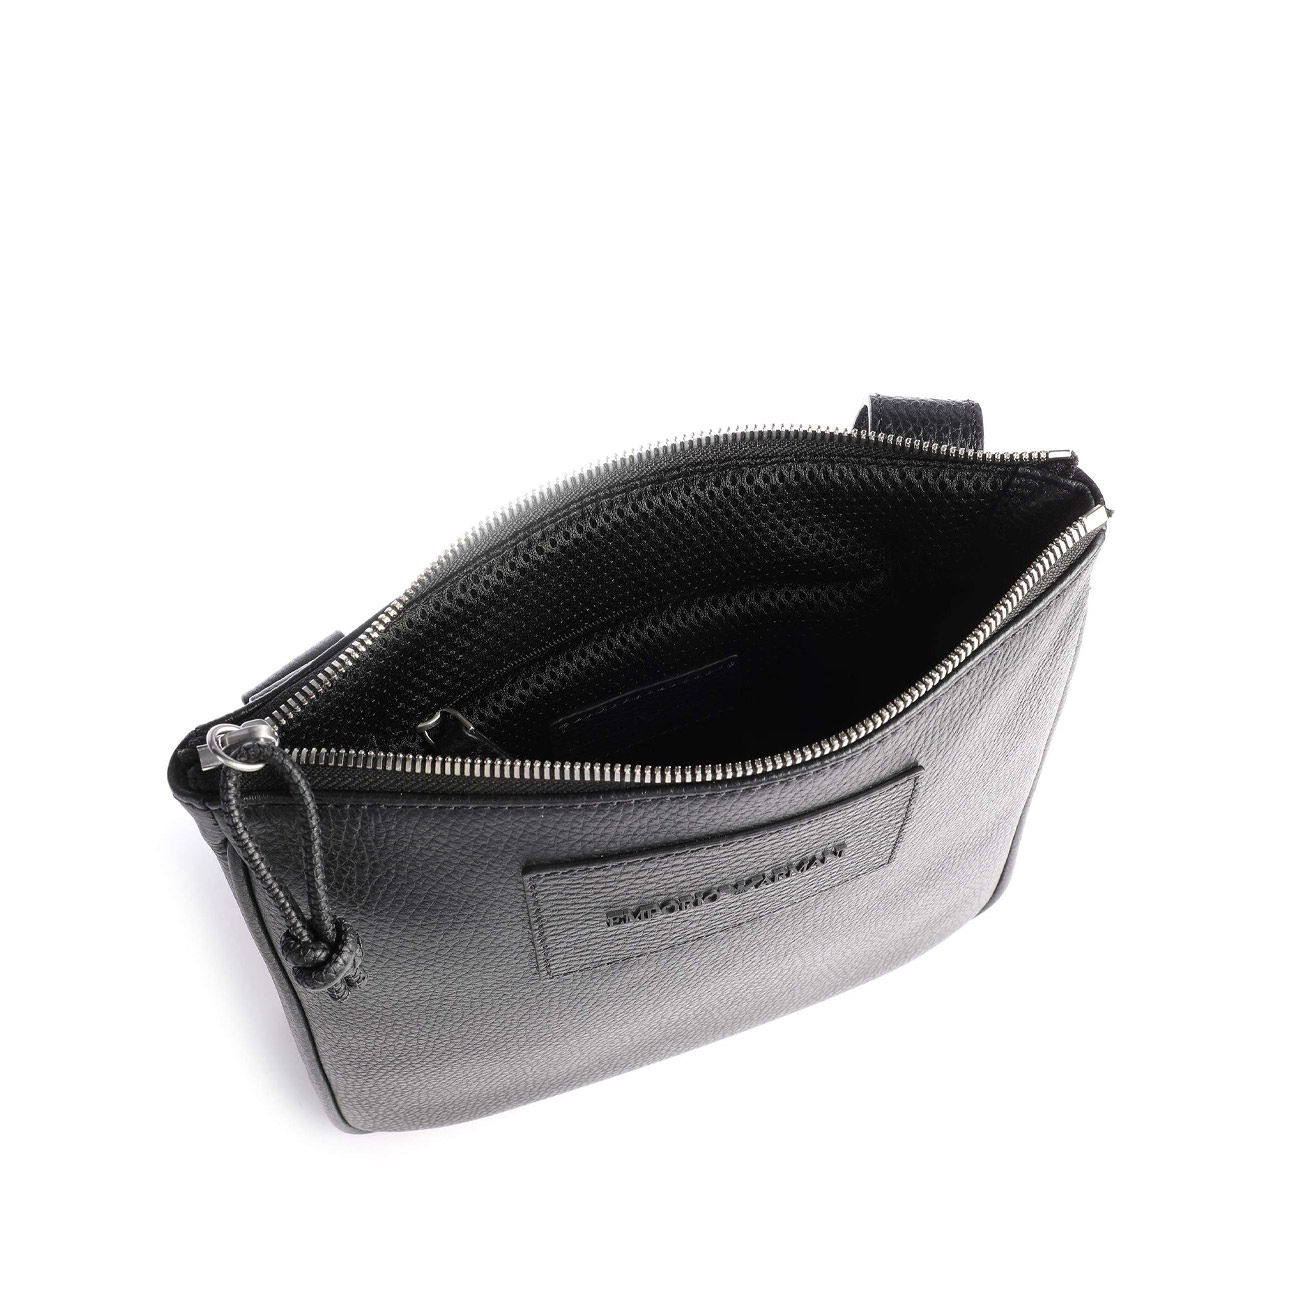 Emporio Armani - Crossbody bag for Man - Black - Y4M185Y138E81072 |  FRMODA.COM